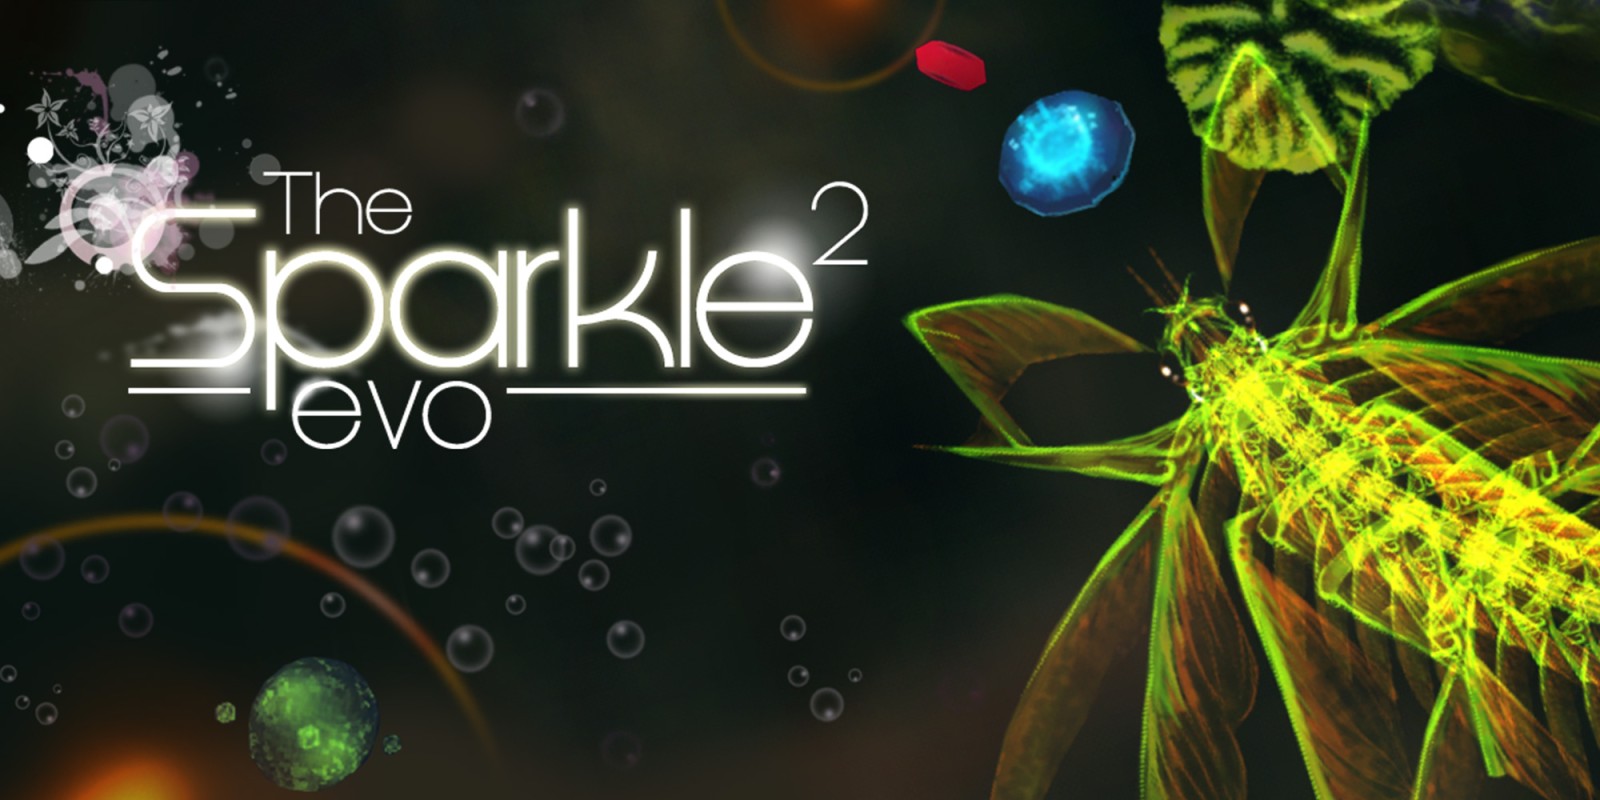 sparkle 2 evo steam game